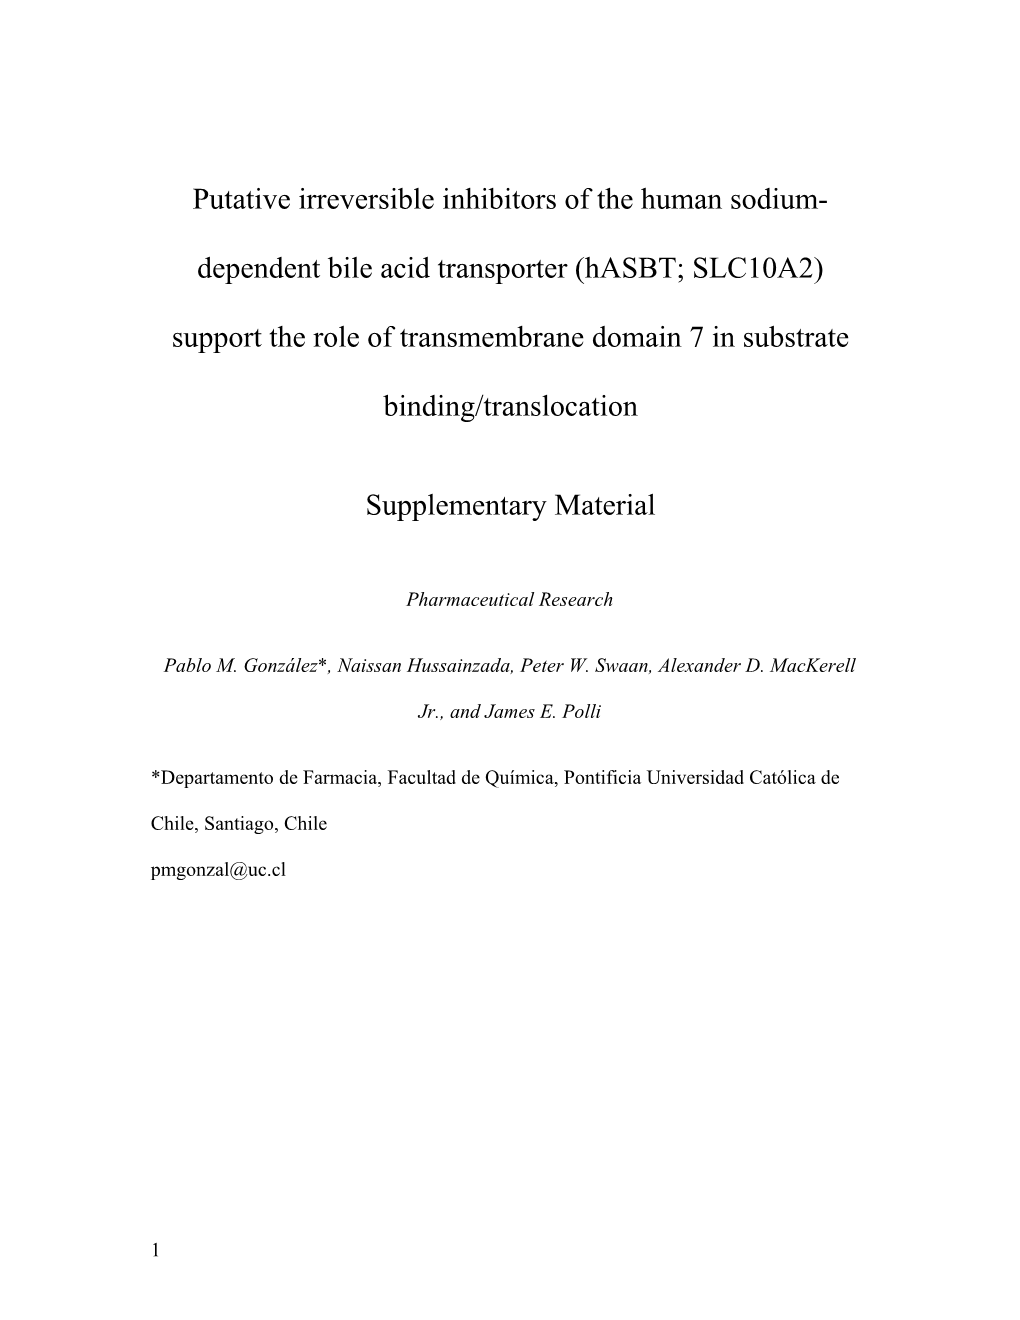 Putative Irreversible Inhibitors of the Human Sodium-Dependent Bile Acid Transporter (Hasbt;